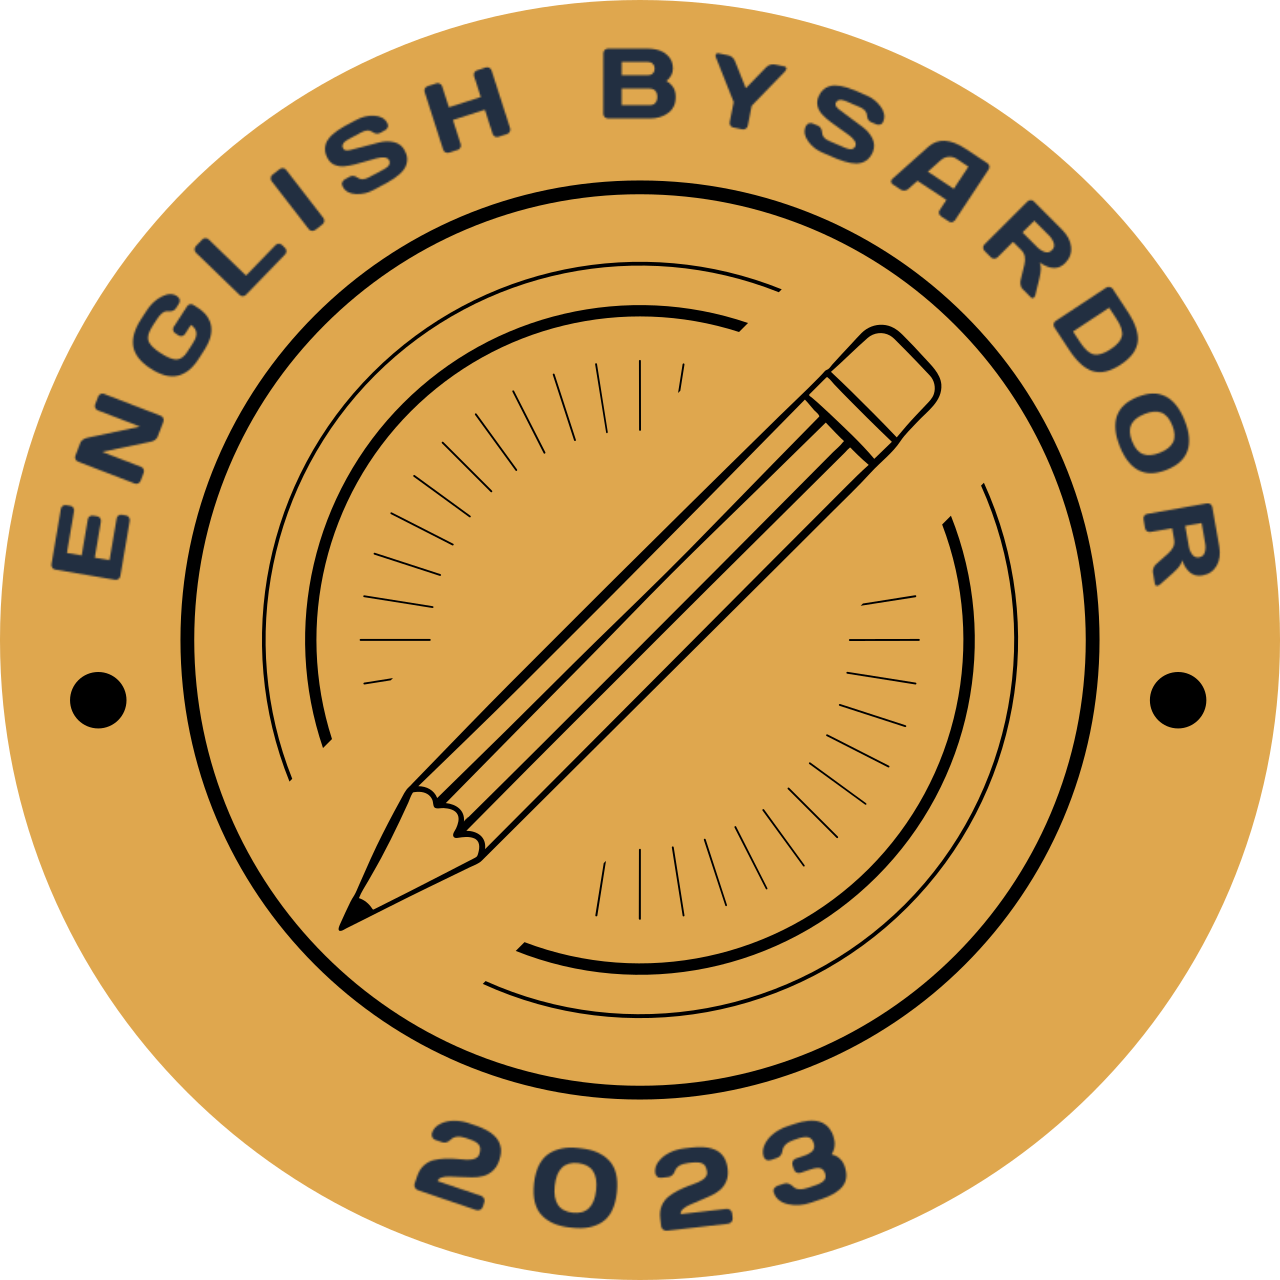 ENGLISH BYSARDOR's web page